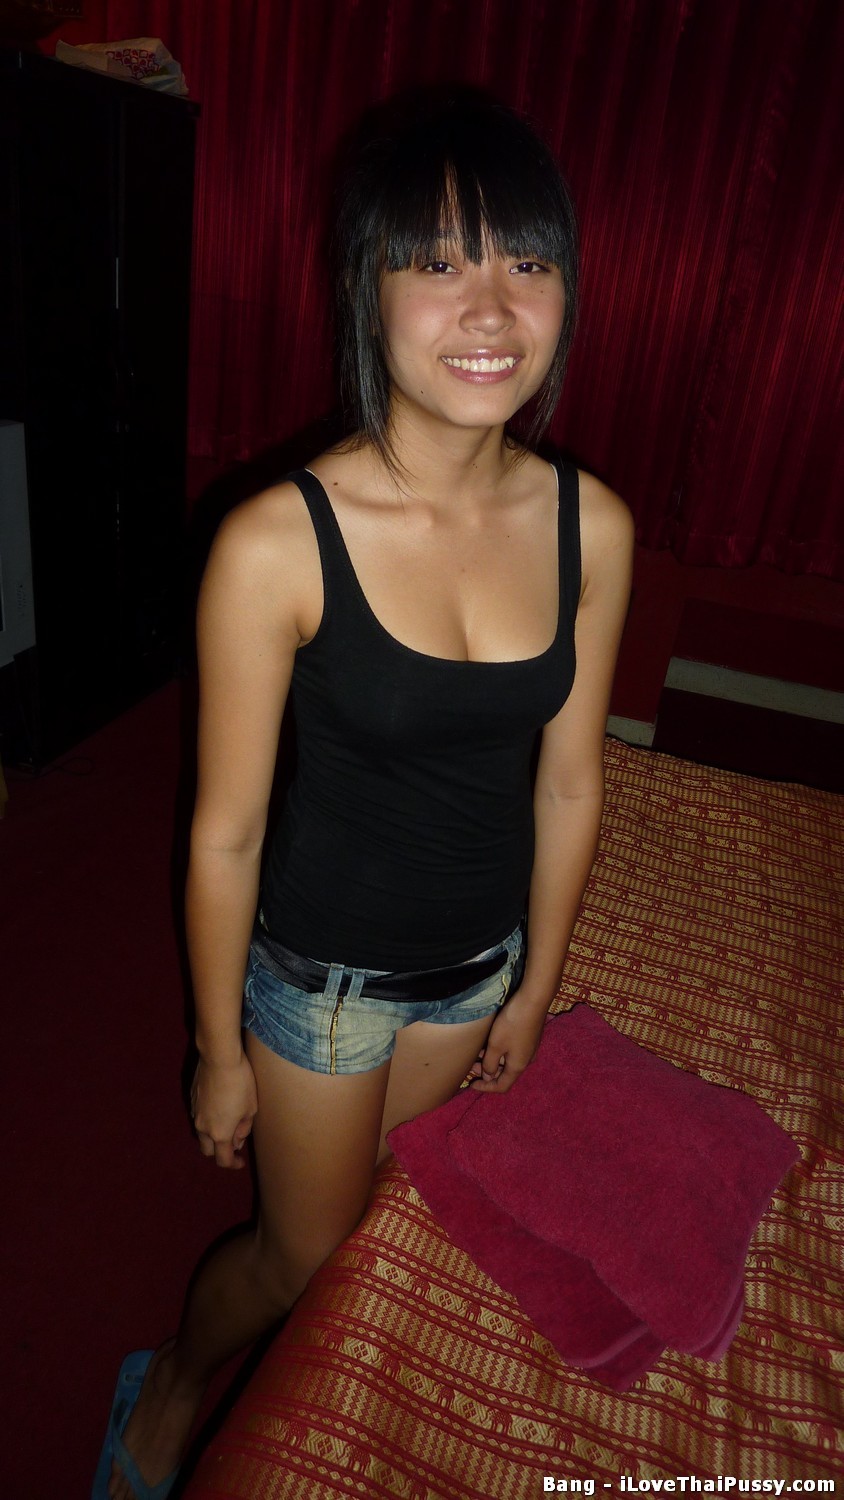 Sporca prostituta tailandese scopata in una sporca stanza di motel
 #69884634